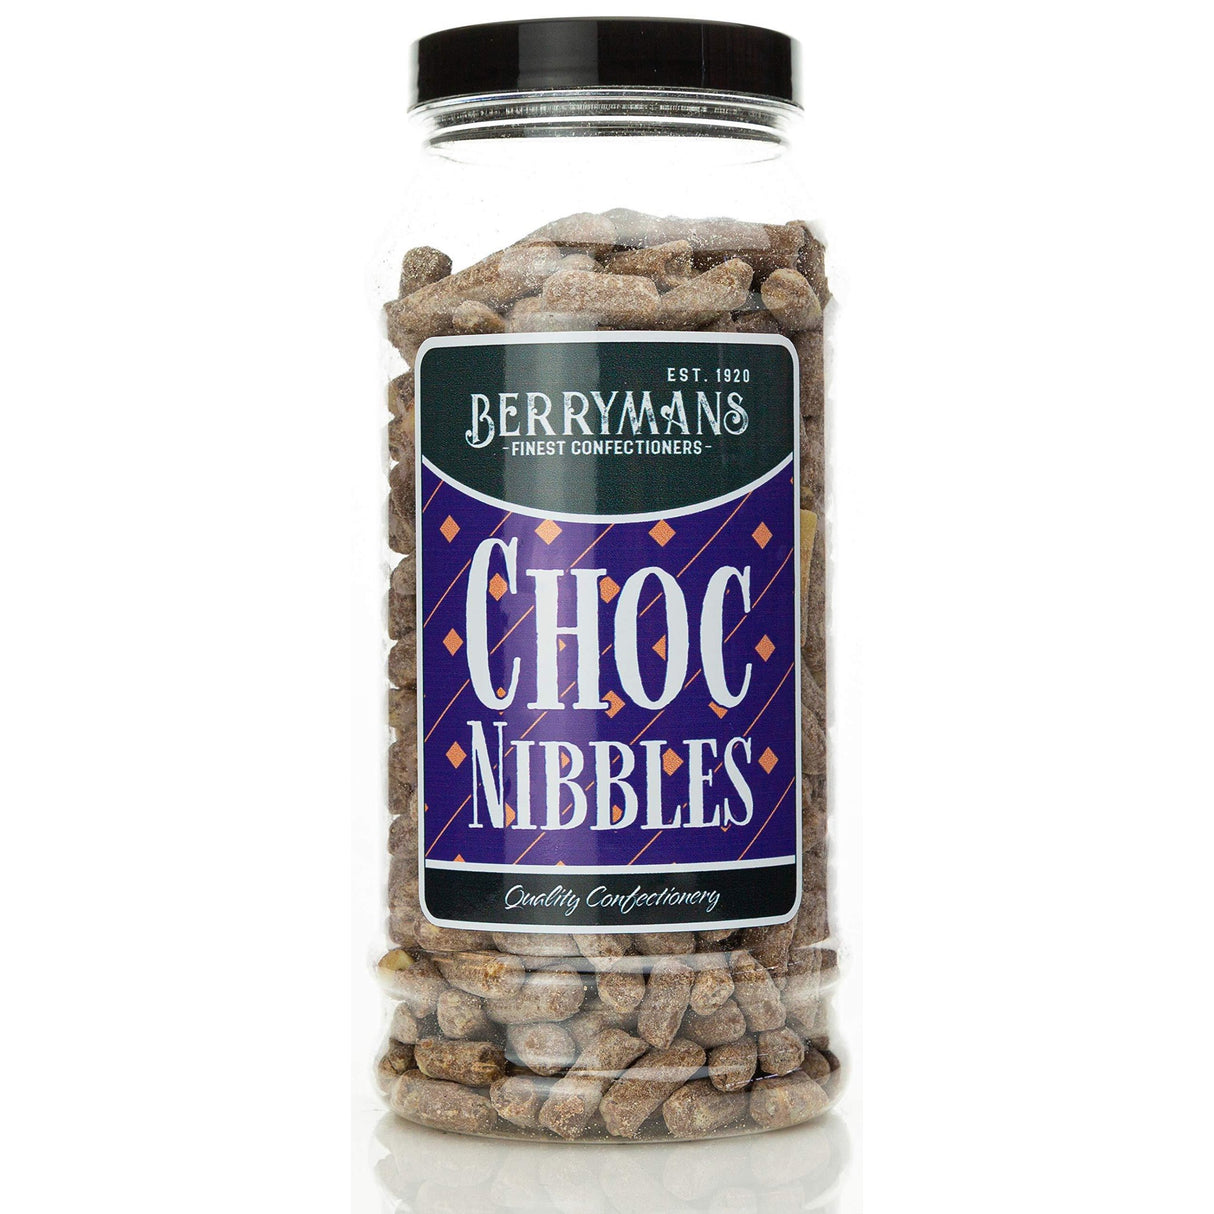 Choc Nibbles